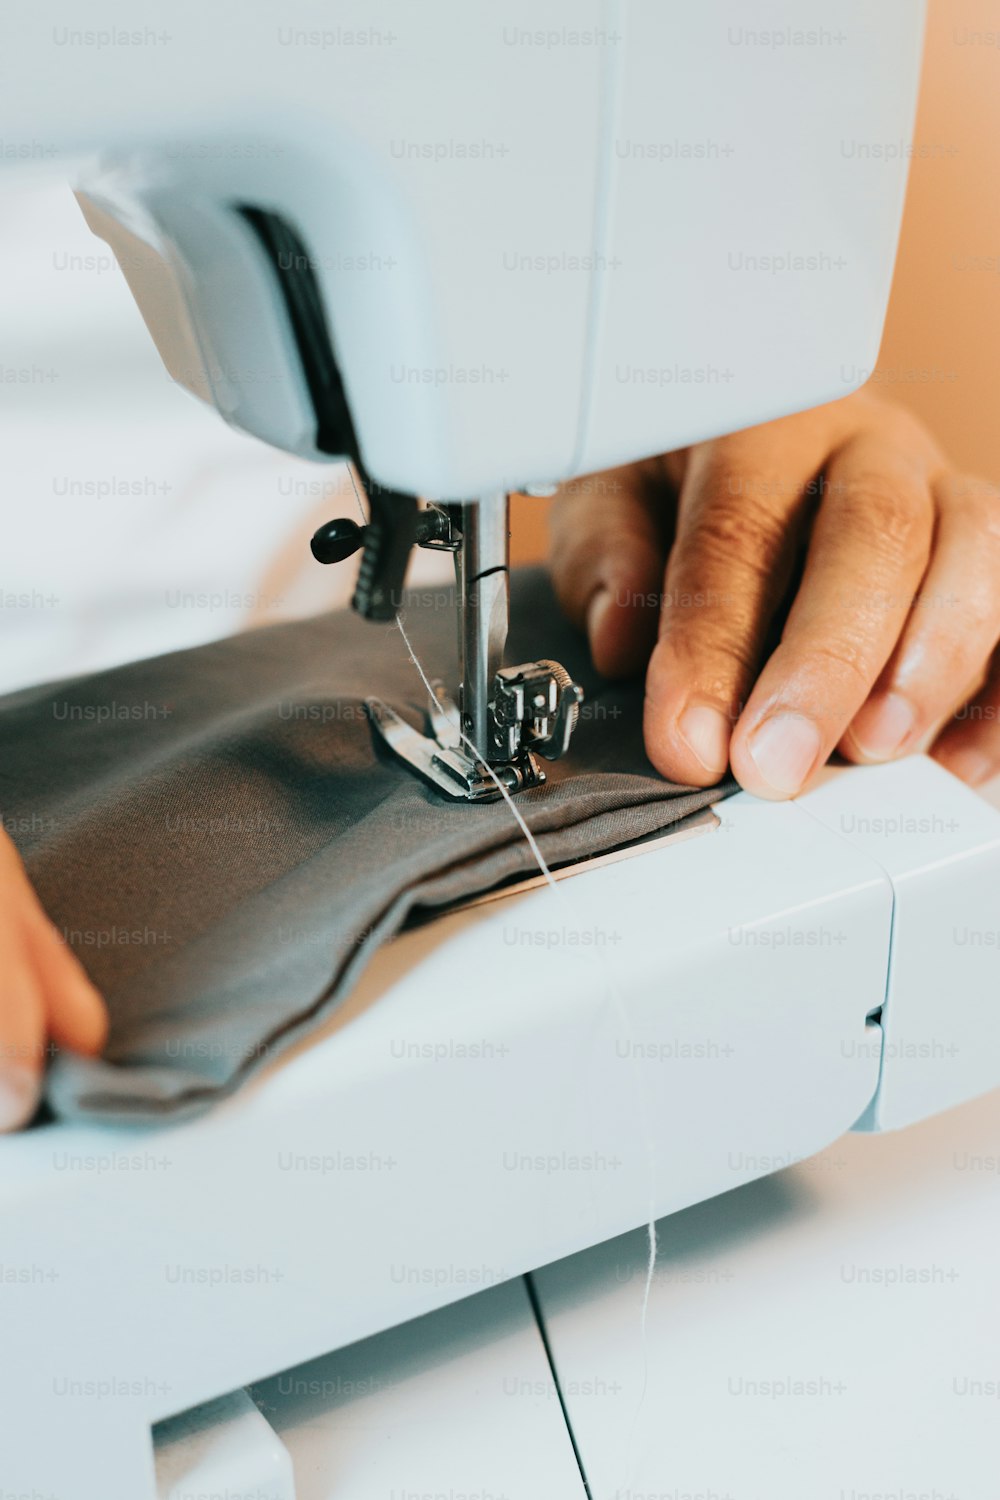 una persona que usa una máquina de coser para coser un trozo de tela